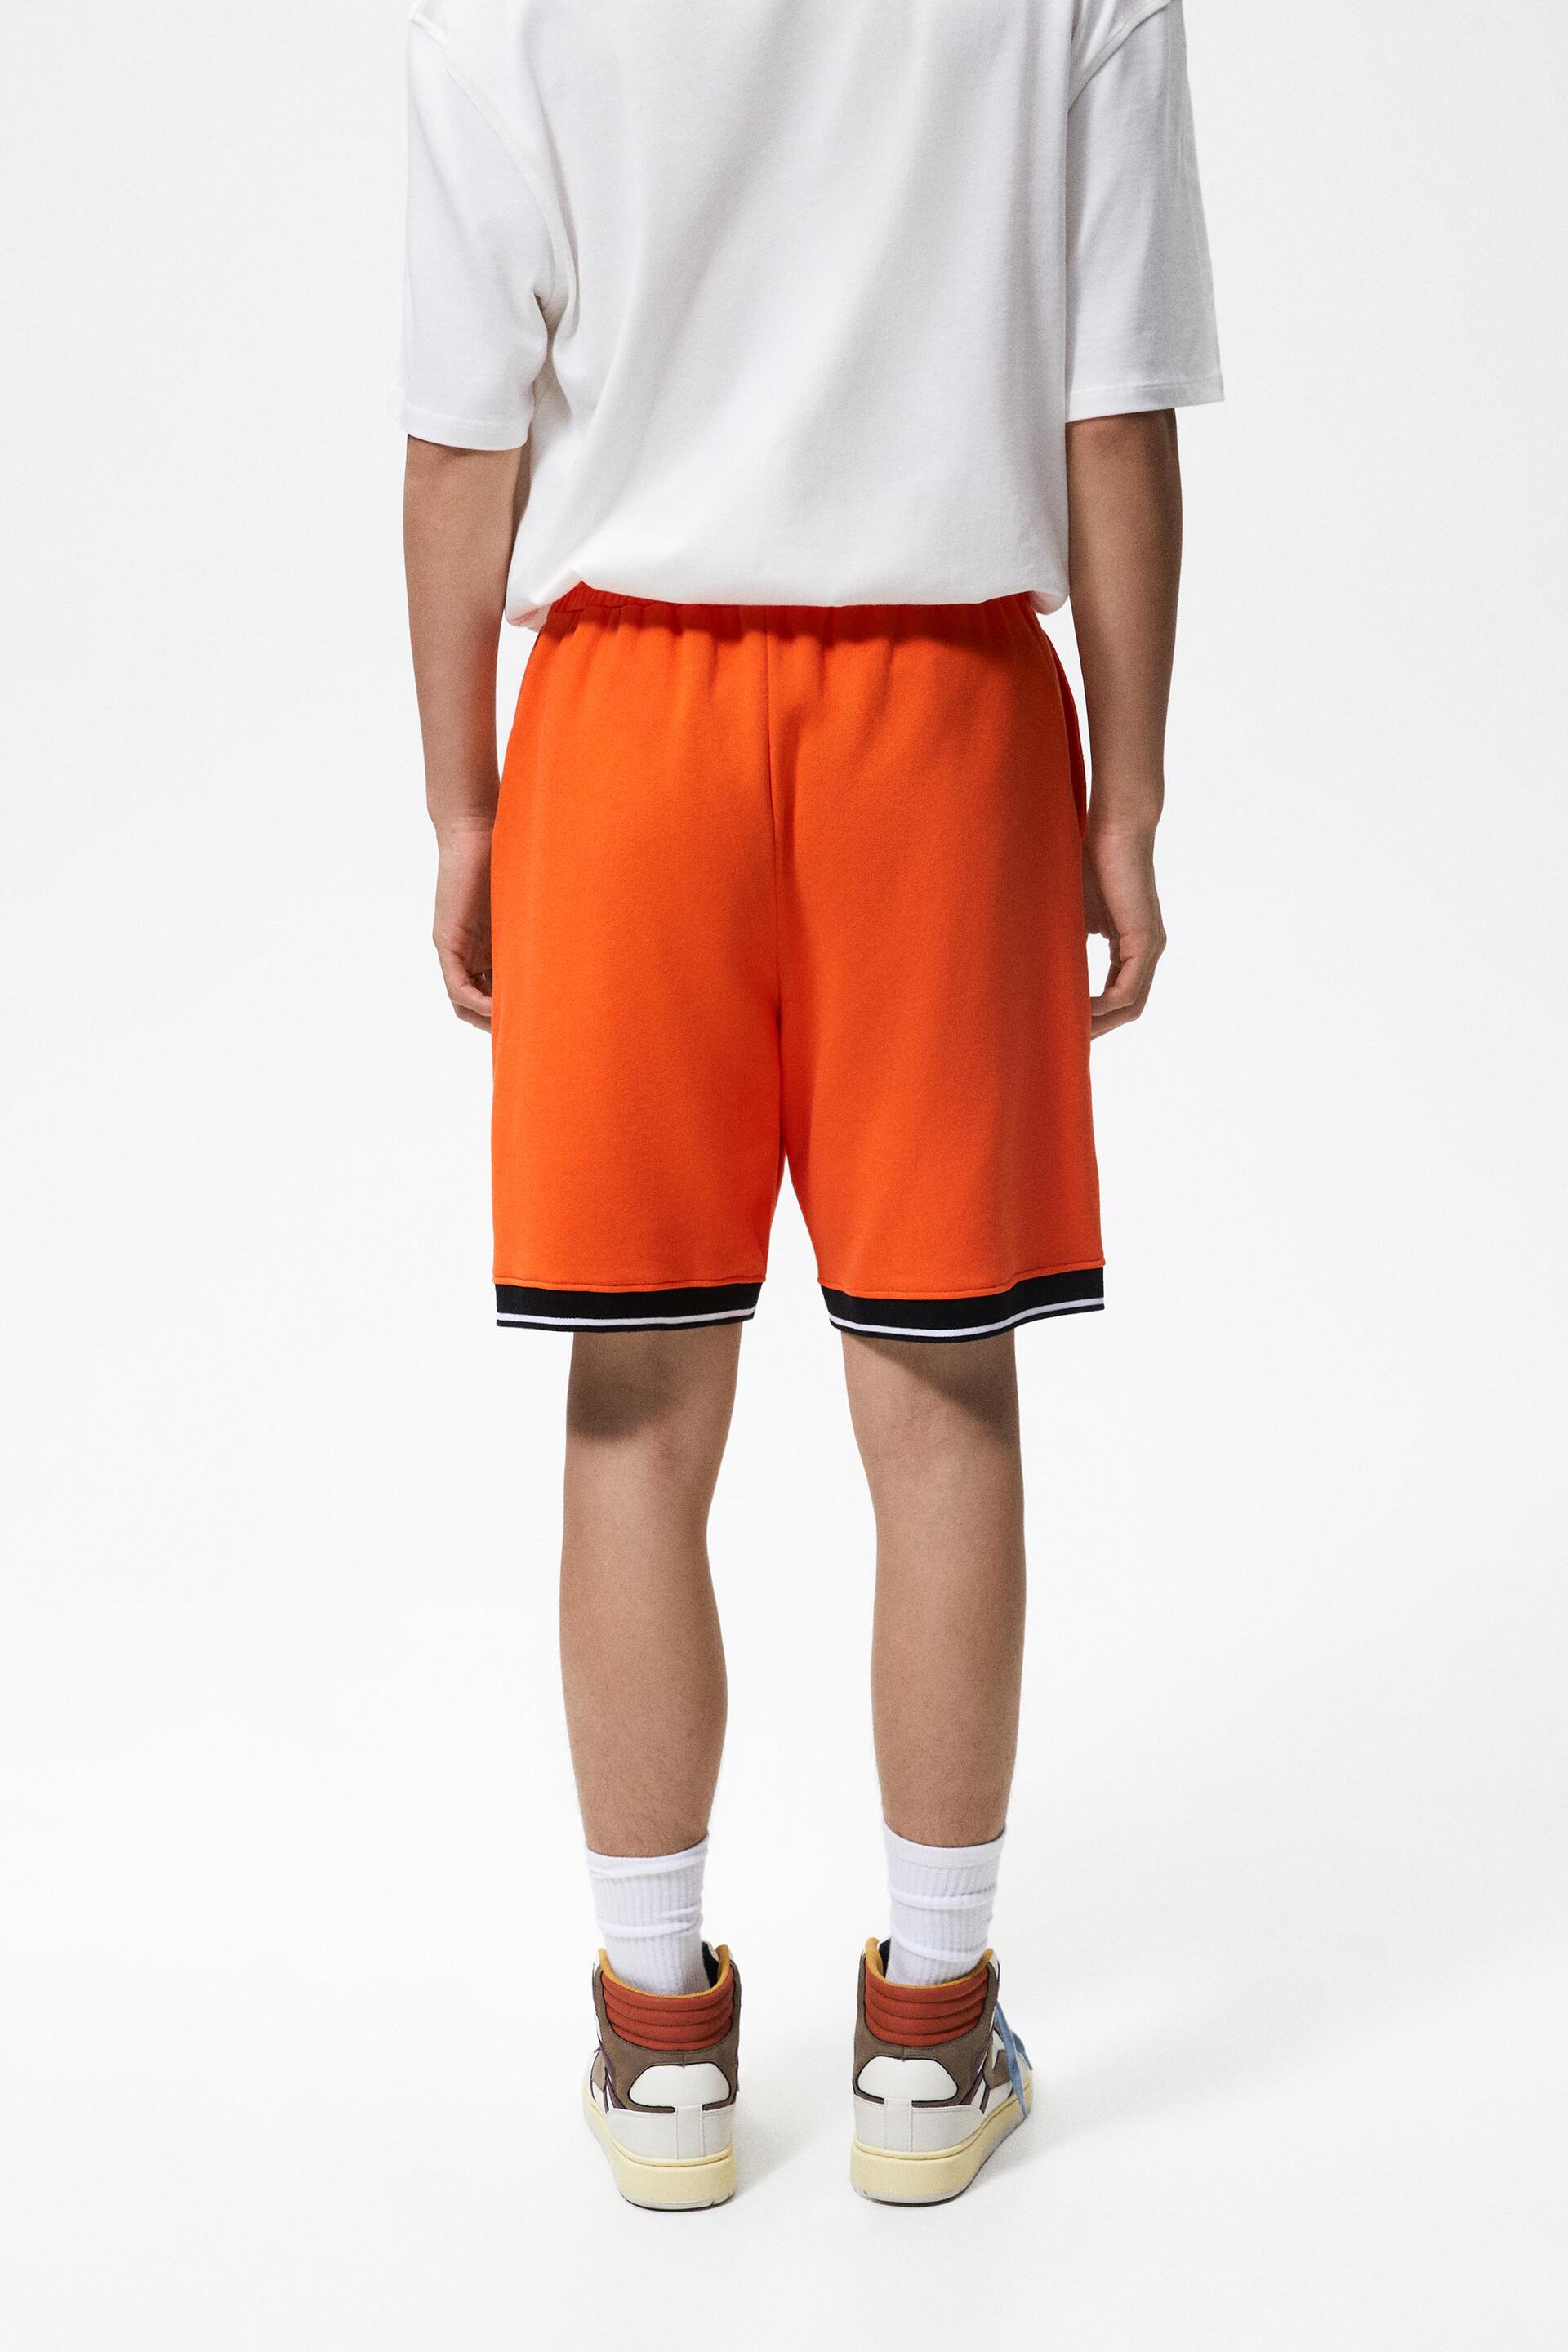 Zara Basketball Embroidered Shorts - Big Apple Buddy